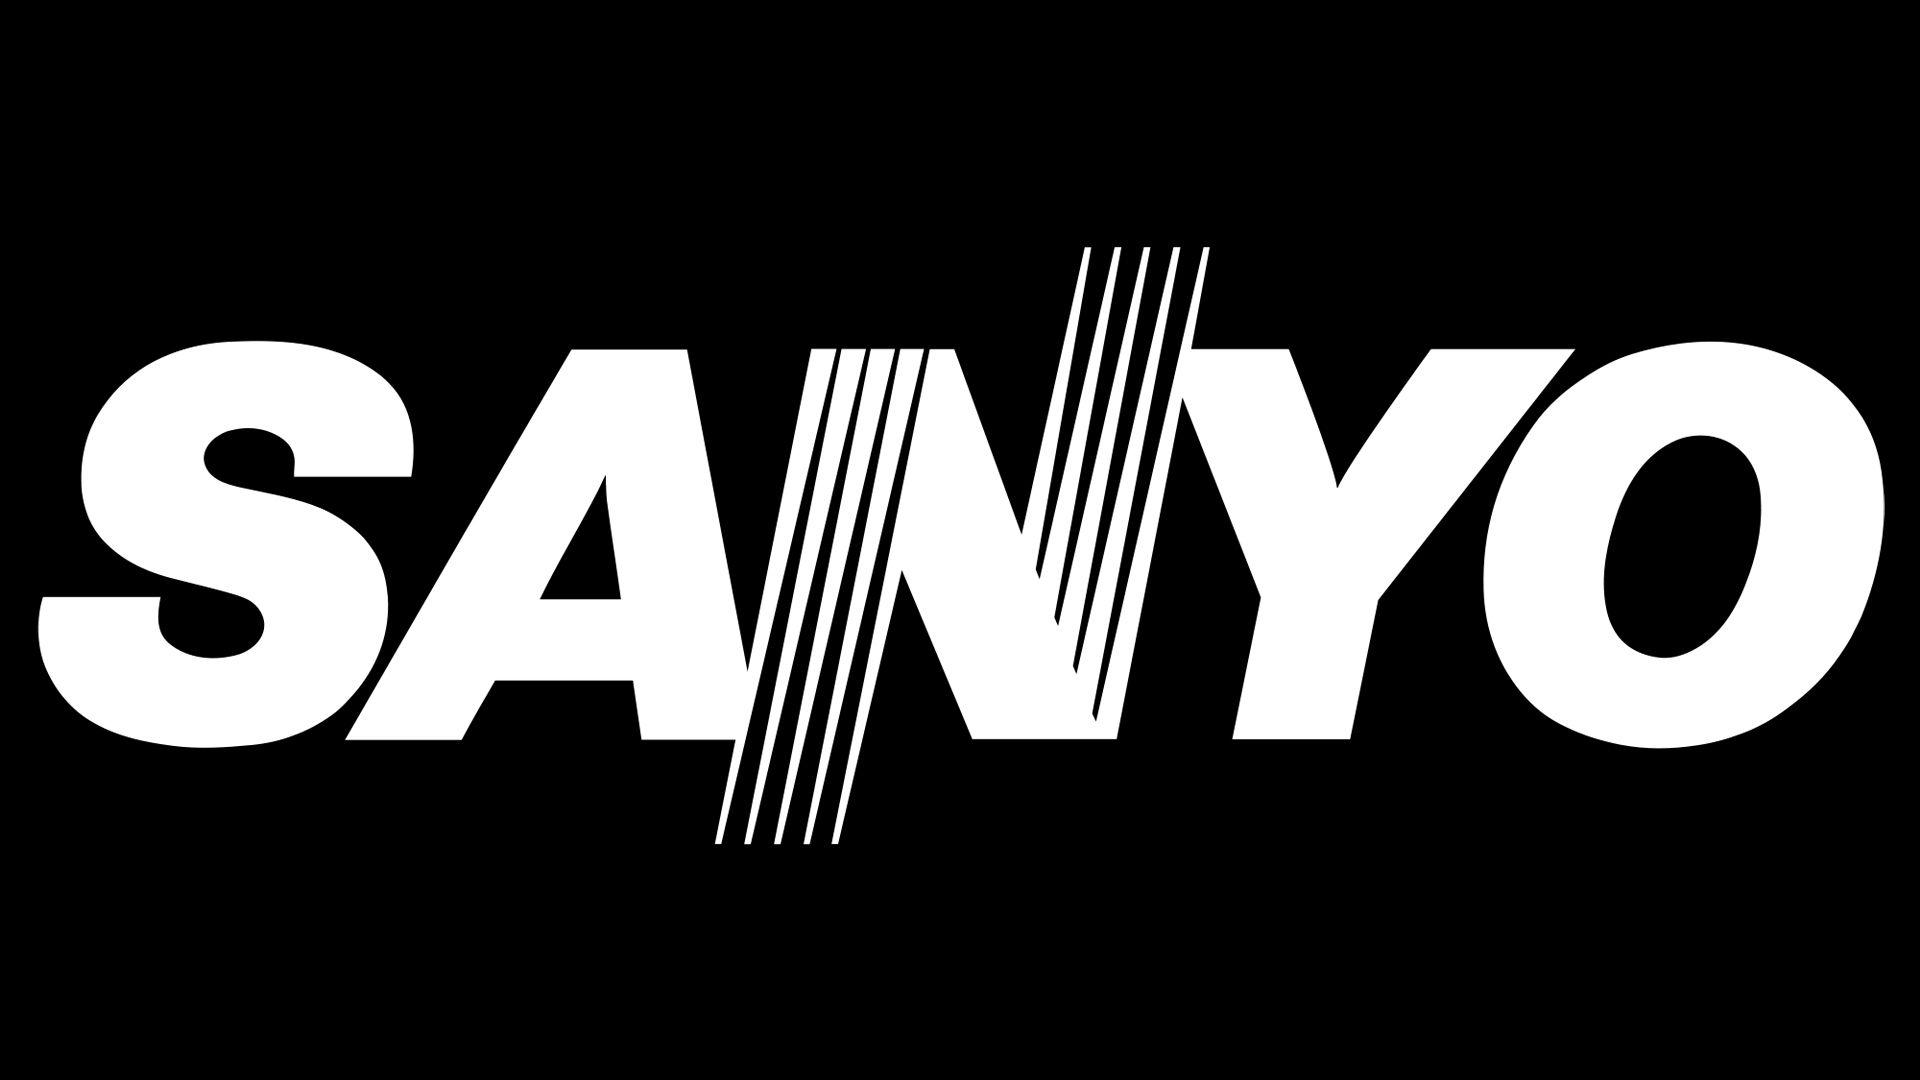 Sanyo Logo - Sanyo Logo, Sanyo Symbol, Meaning, History and Evolution